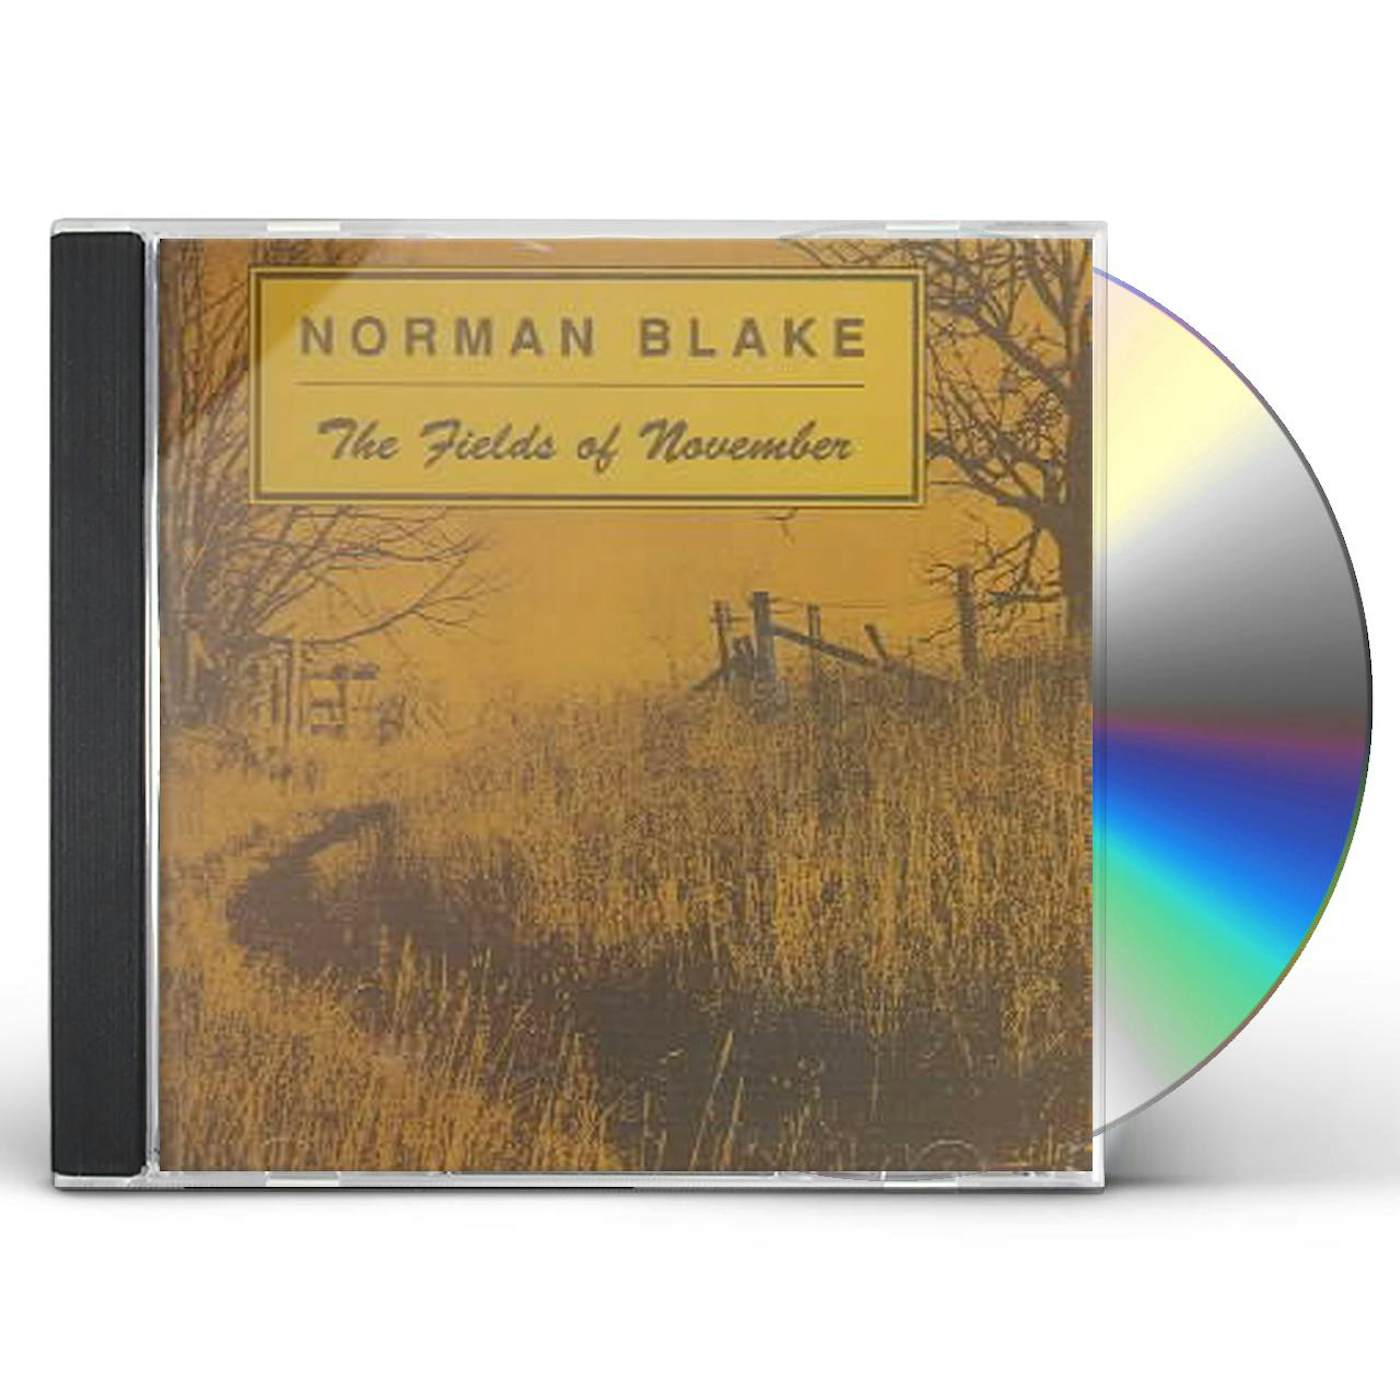 Norman Blake FIELDS OF NOVEMBER & OLD & NEW CD